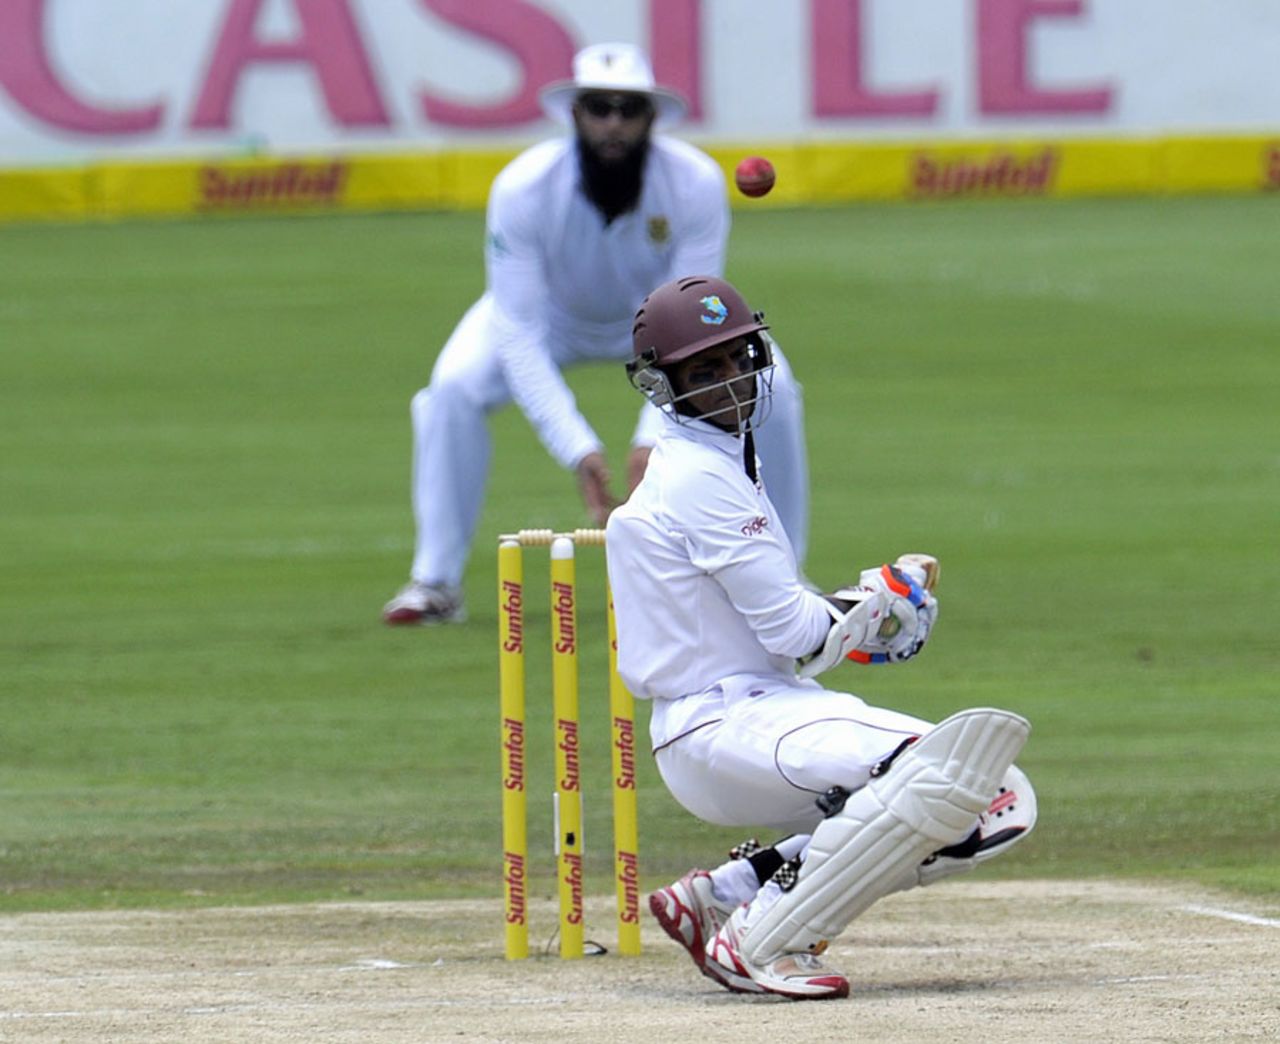 Shivnarine Chanderpaul ducks under a bouncer, South Africa v West Indies, 1st Test, Centurion, 4th day, December 20, 2014